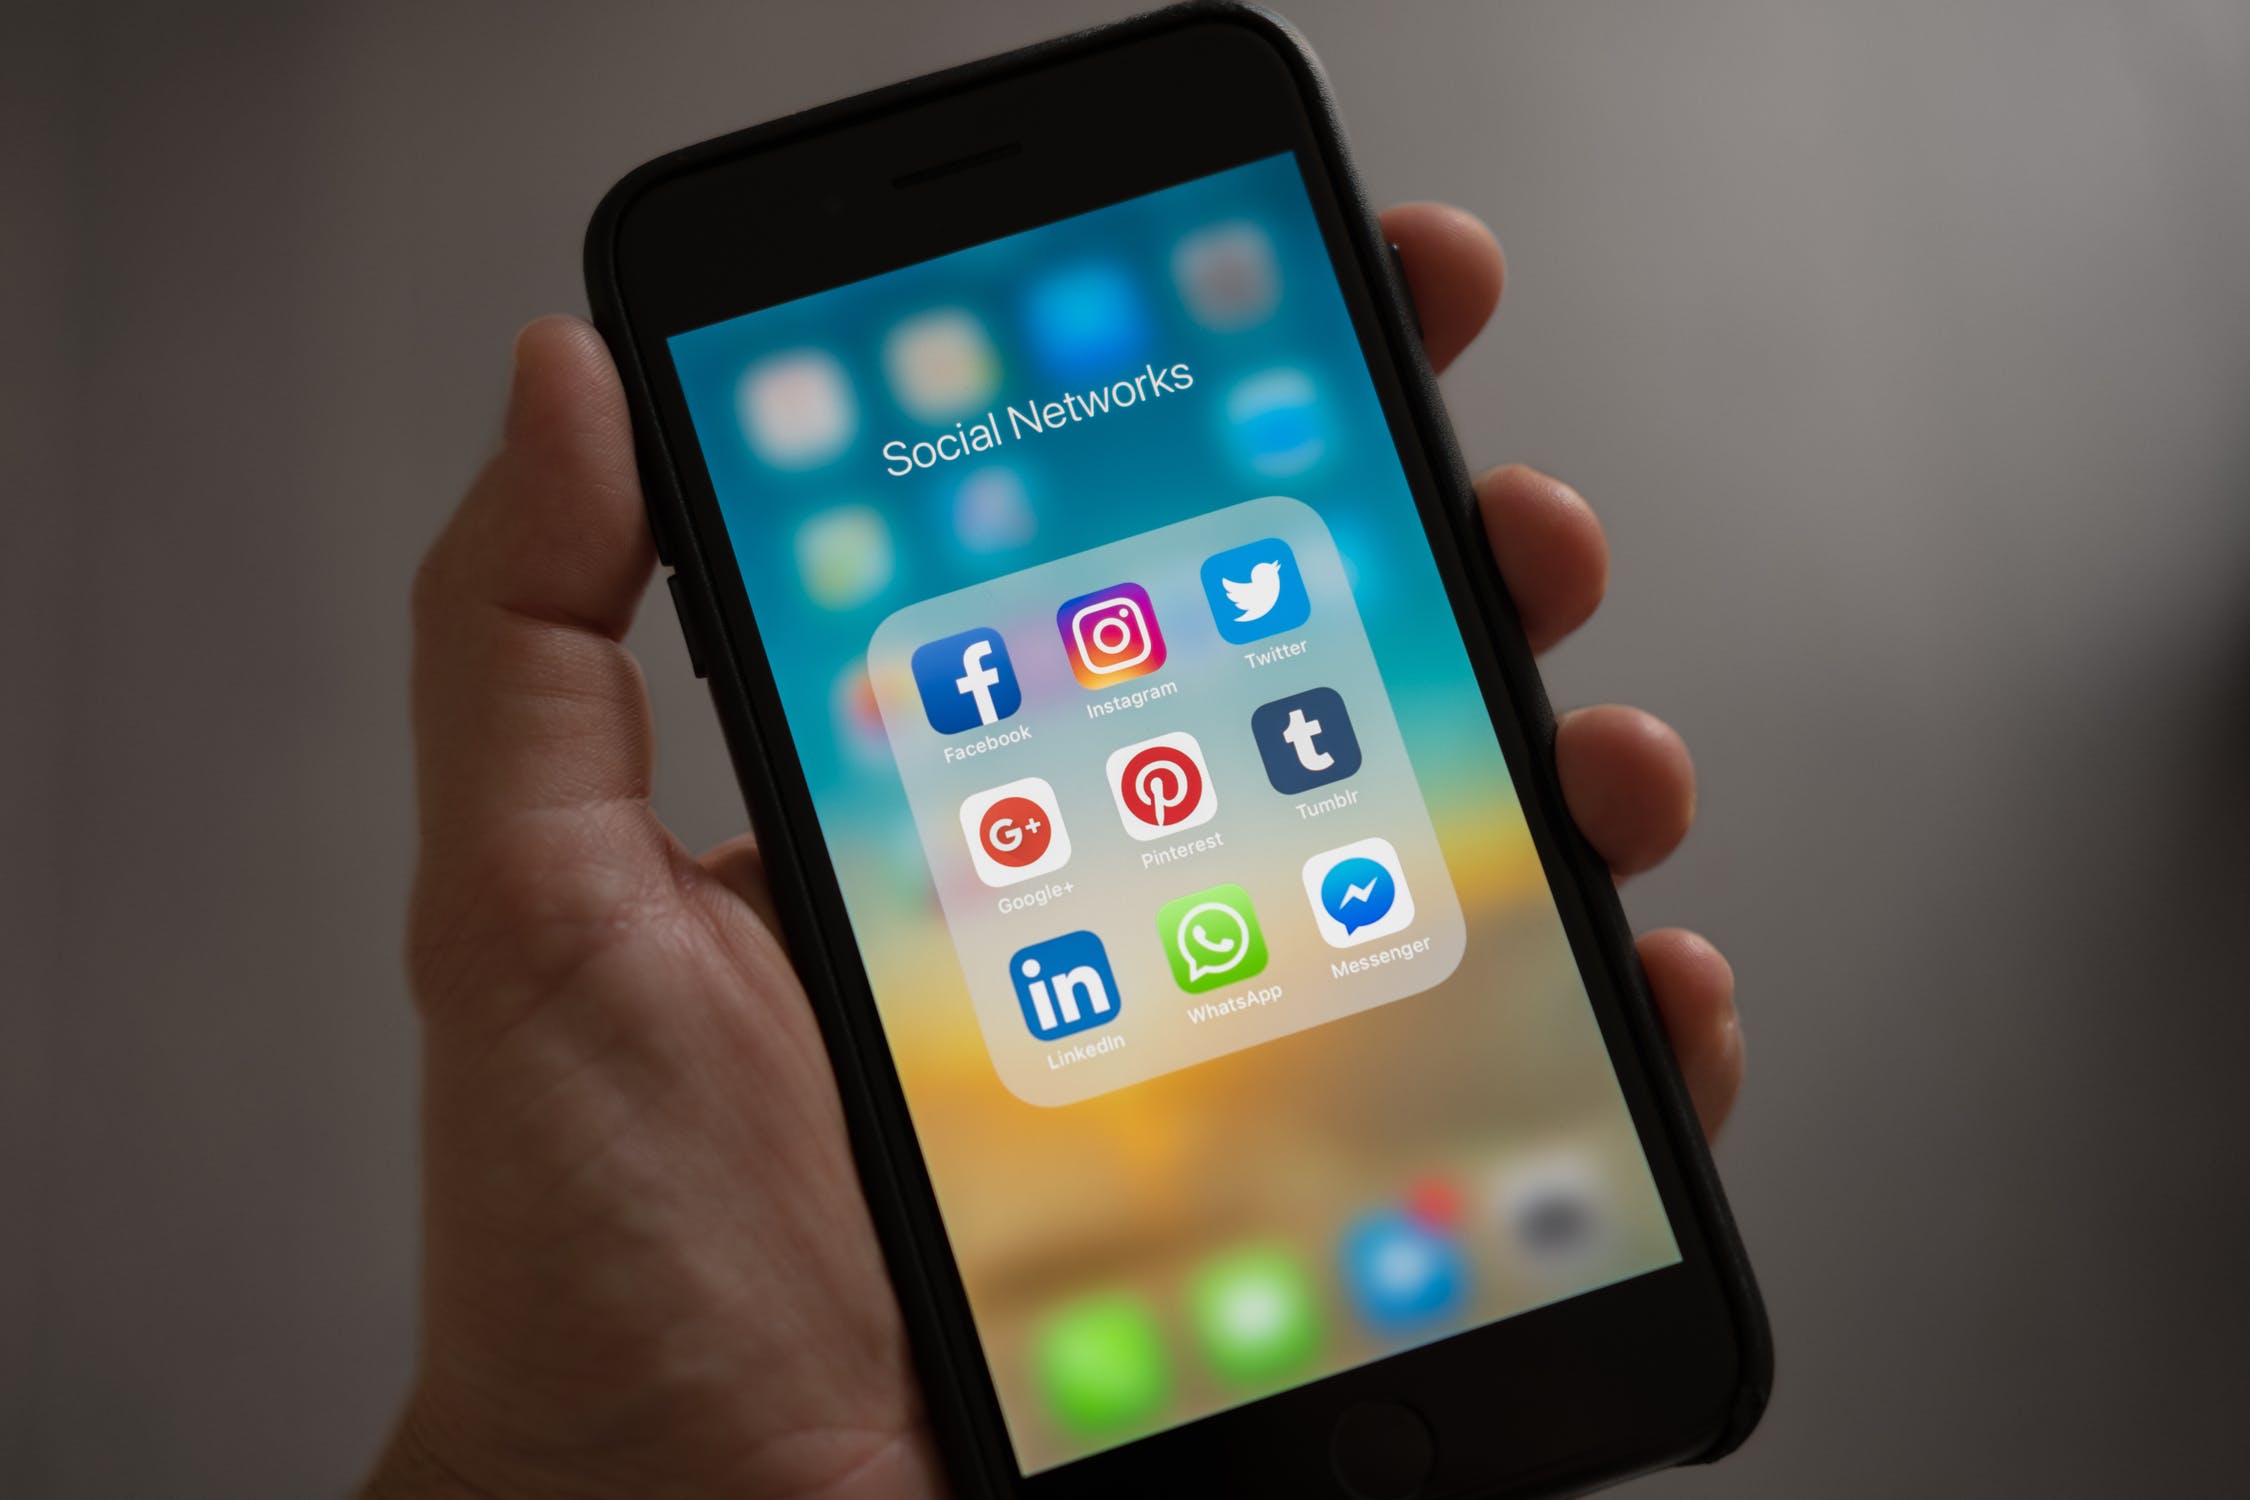 social media platforms on a smartphone screen